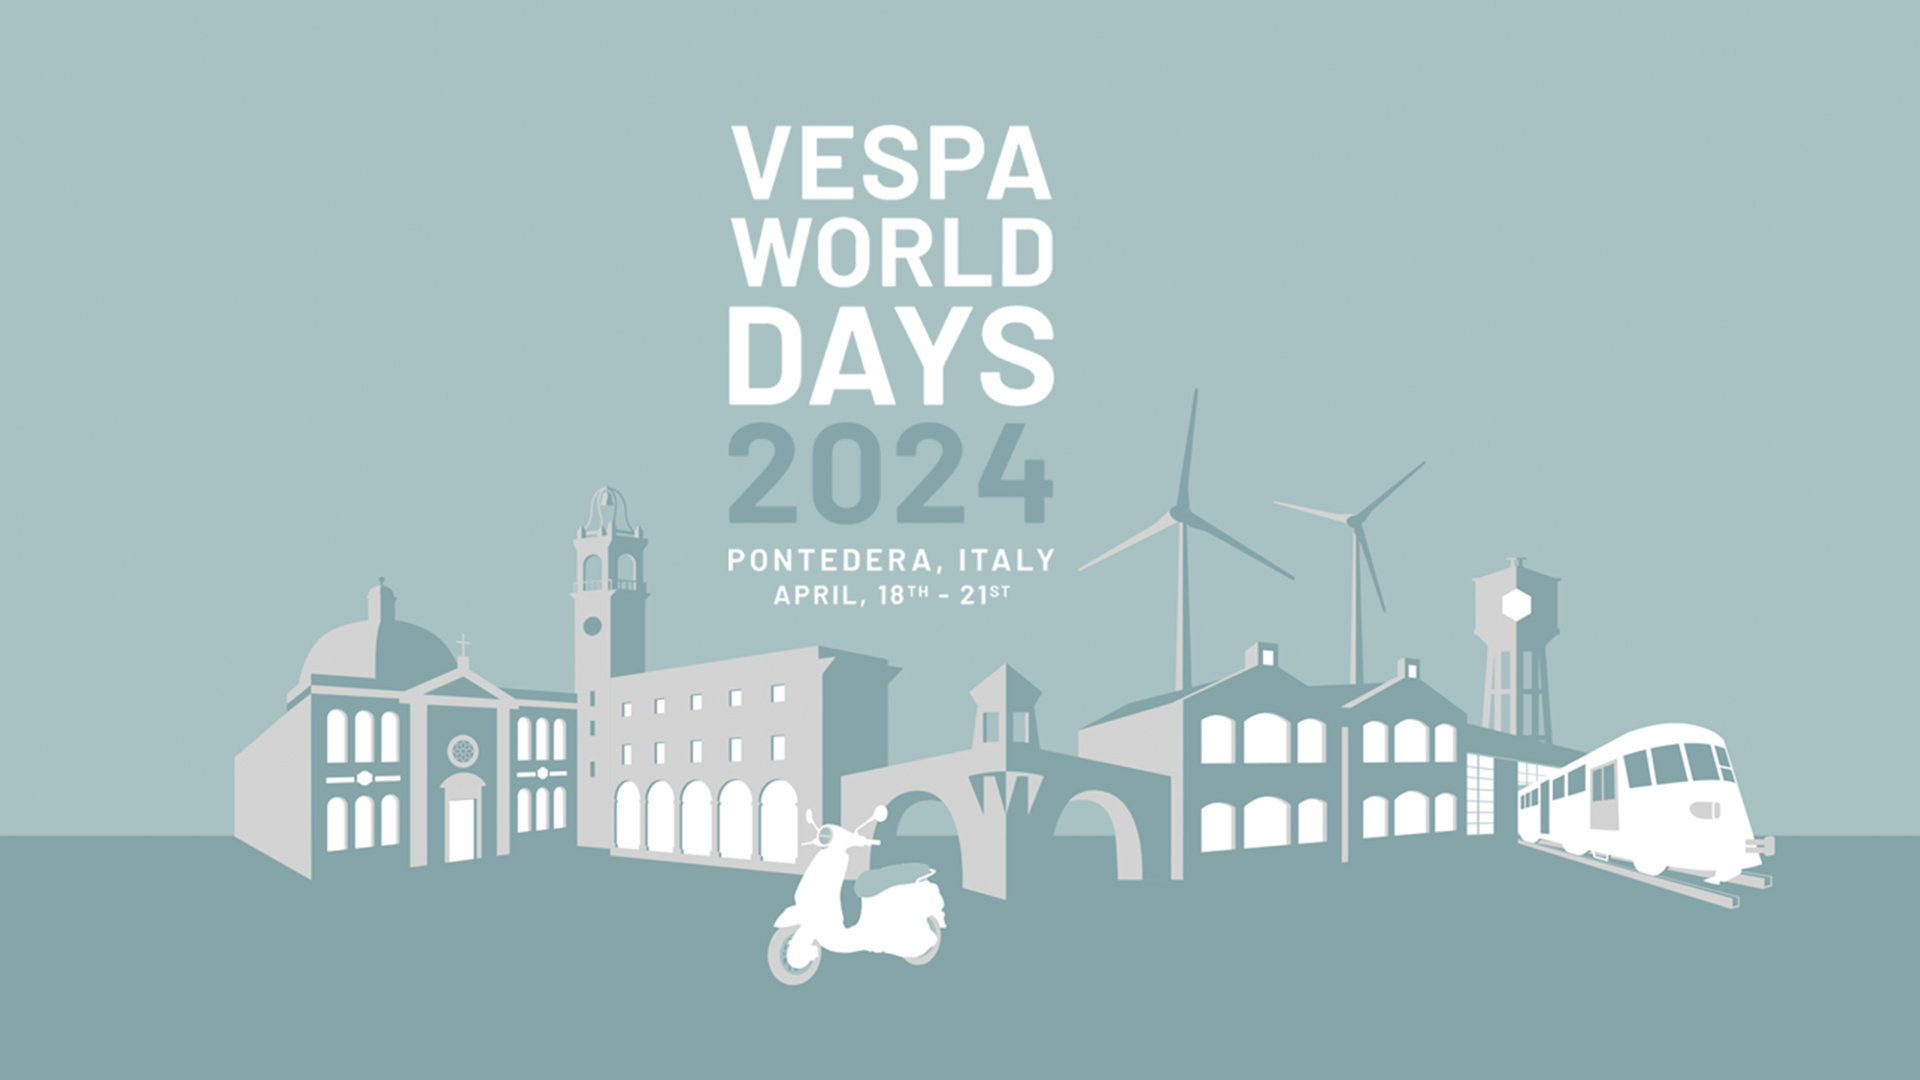 VESPA WORLD DAYS 2024